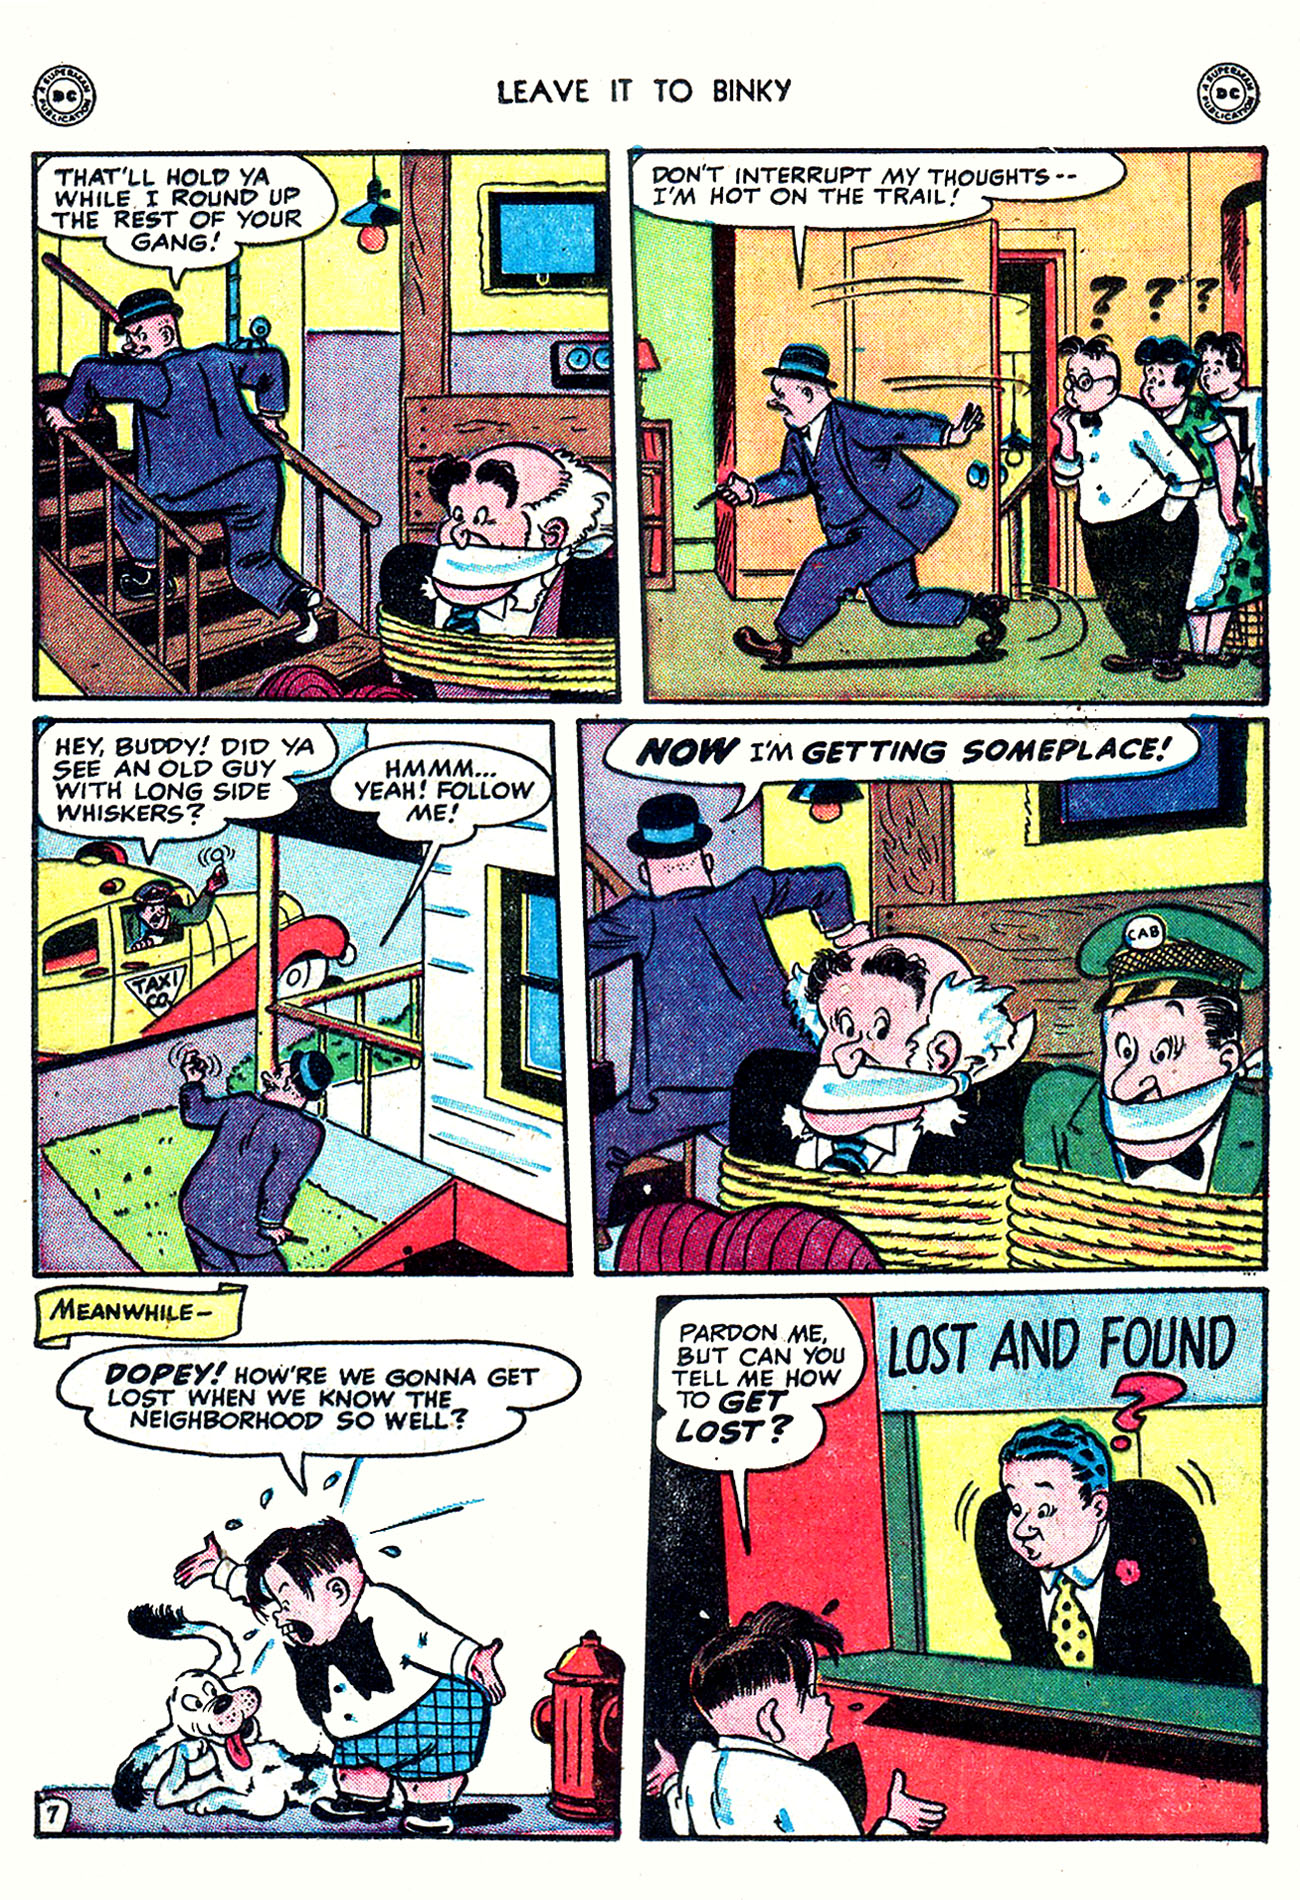 Read online Leave it to Binky comic -  Issue #6 - 25